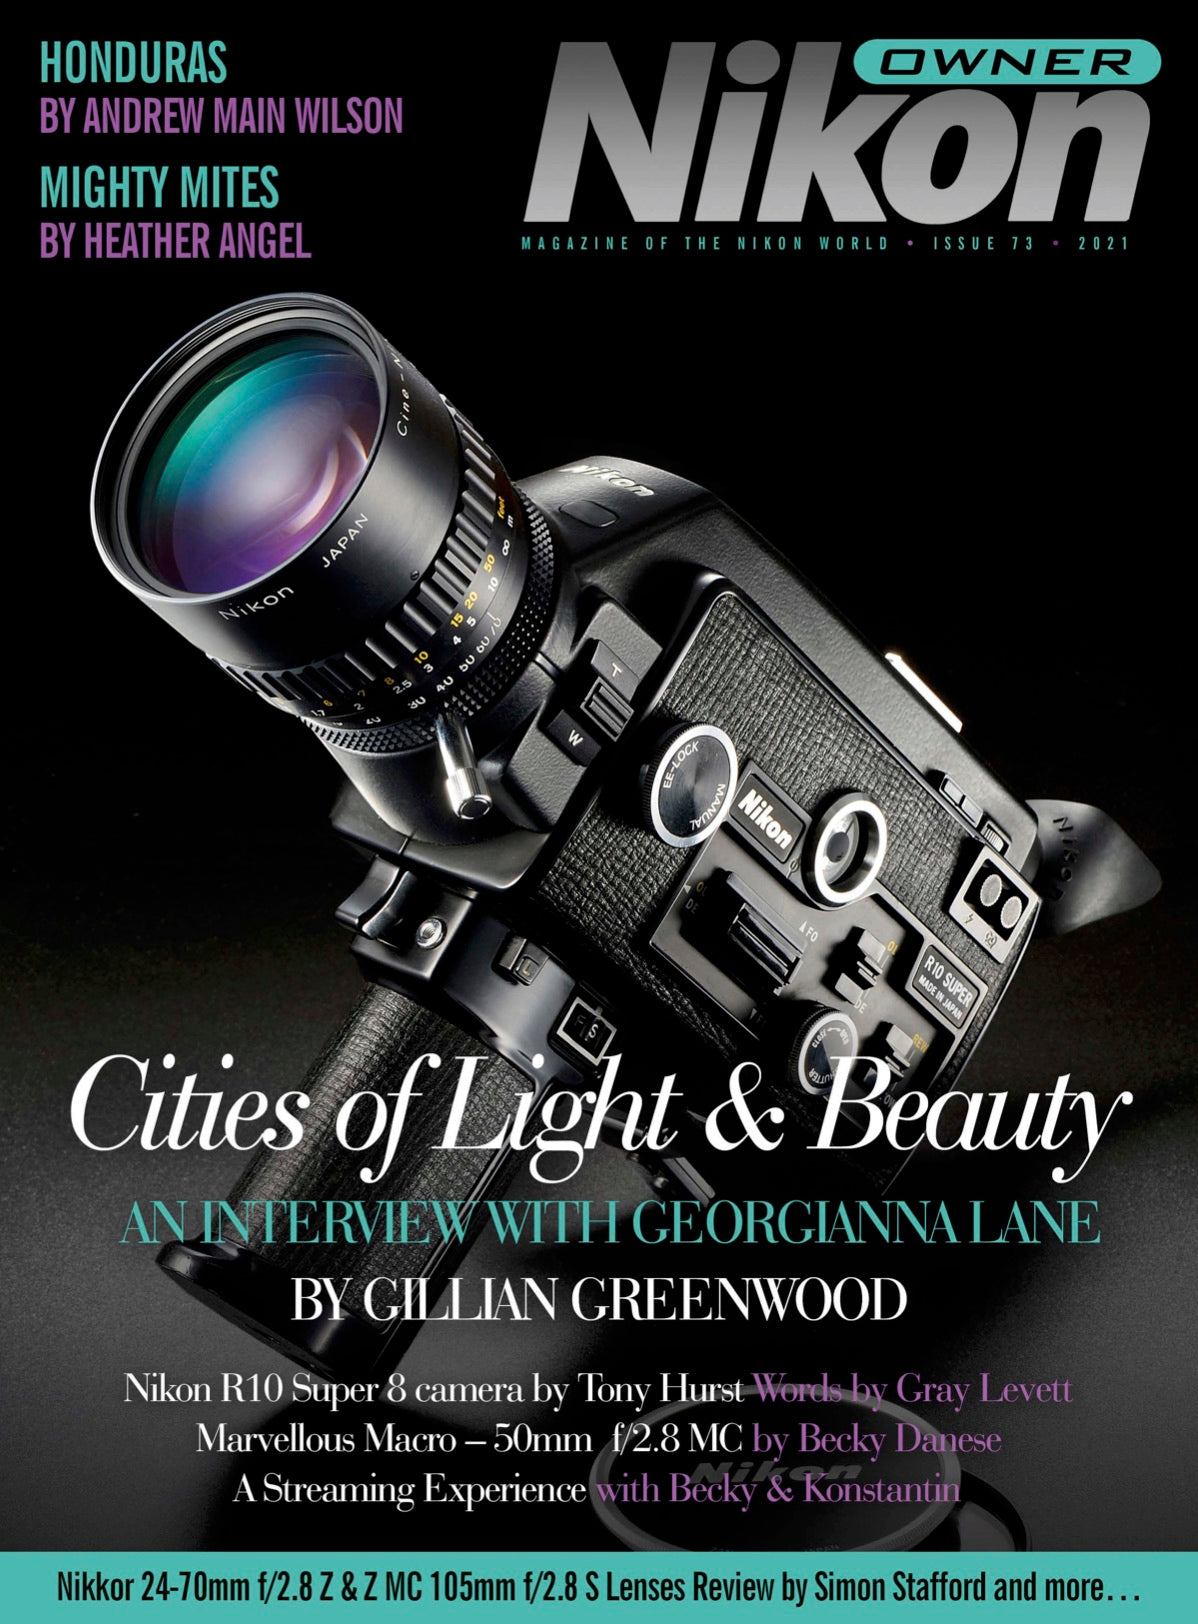 Nikon Owner Magazine issue 73